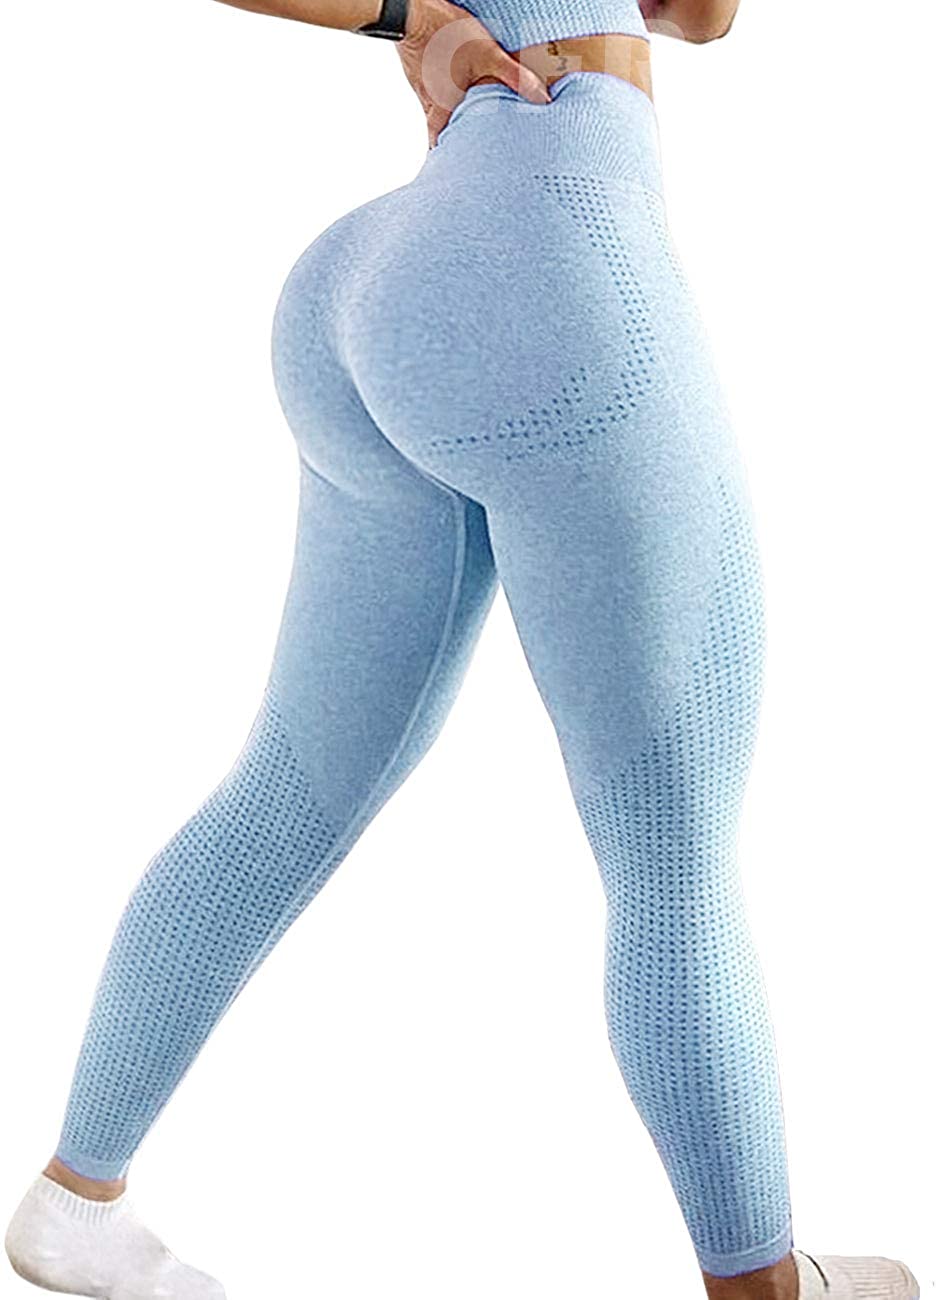 TOWED22 Sports Fitness Pants Women's Tight Peach Hip Yoga Pants Stretch  Pants(Blue,XL) 